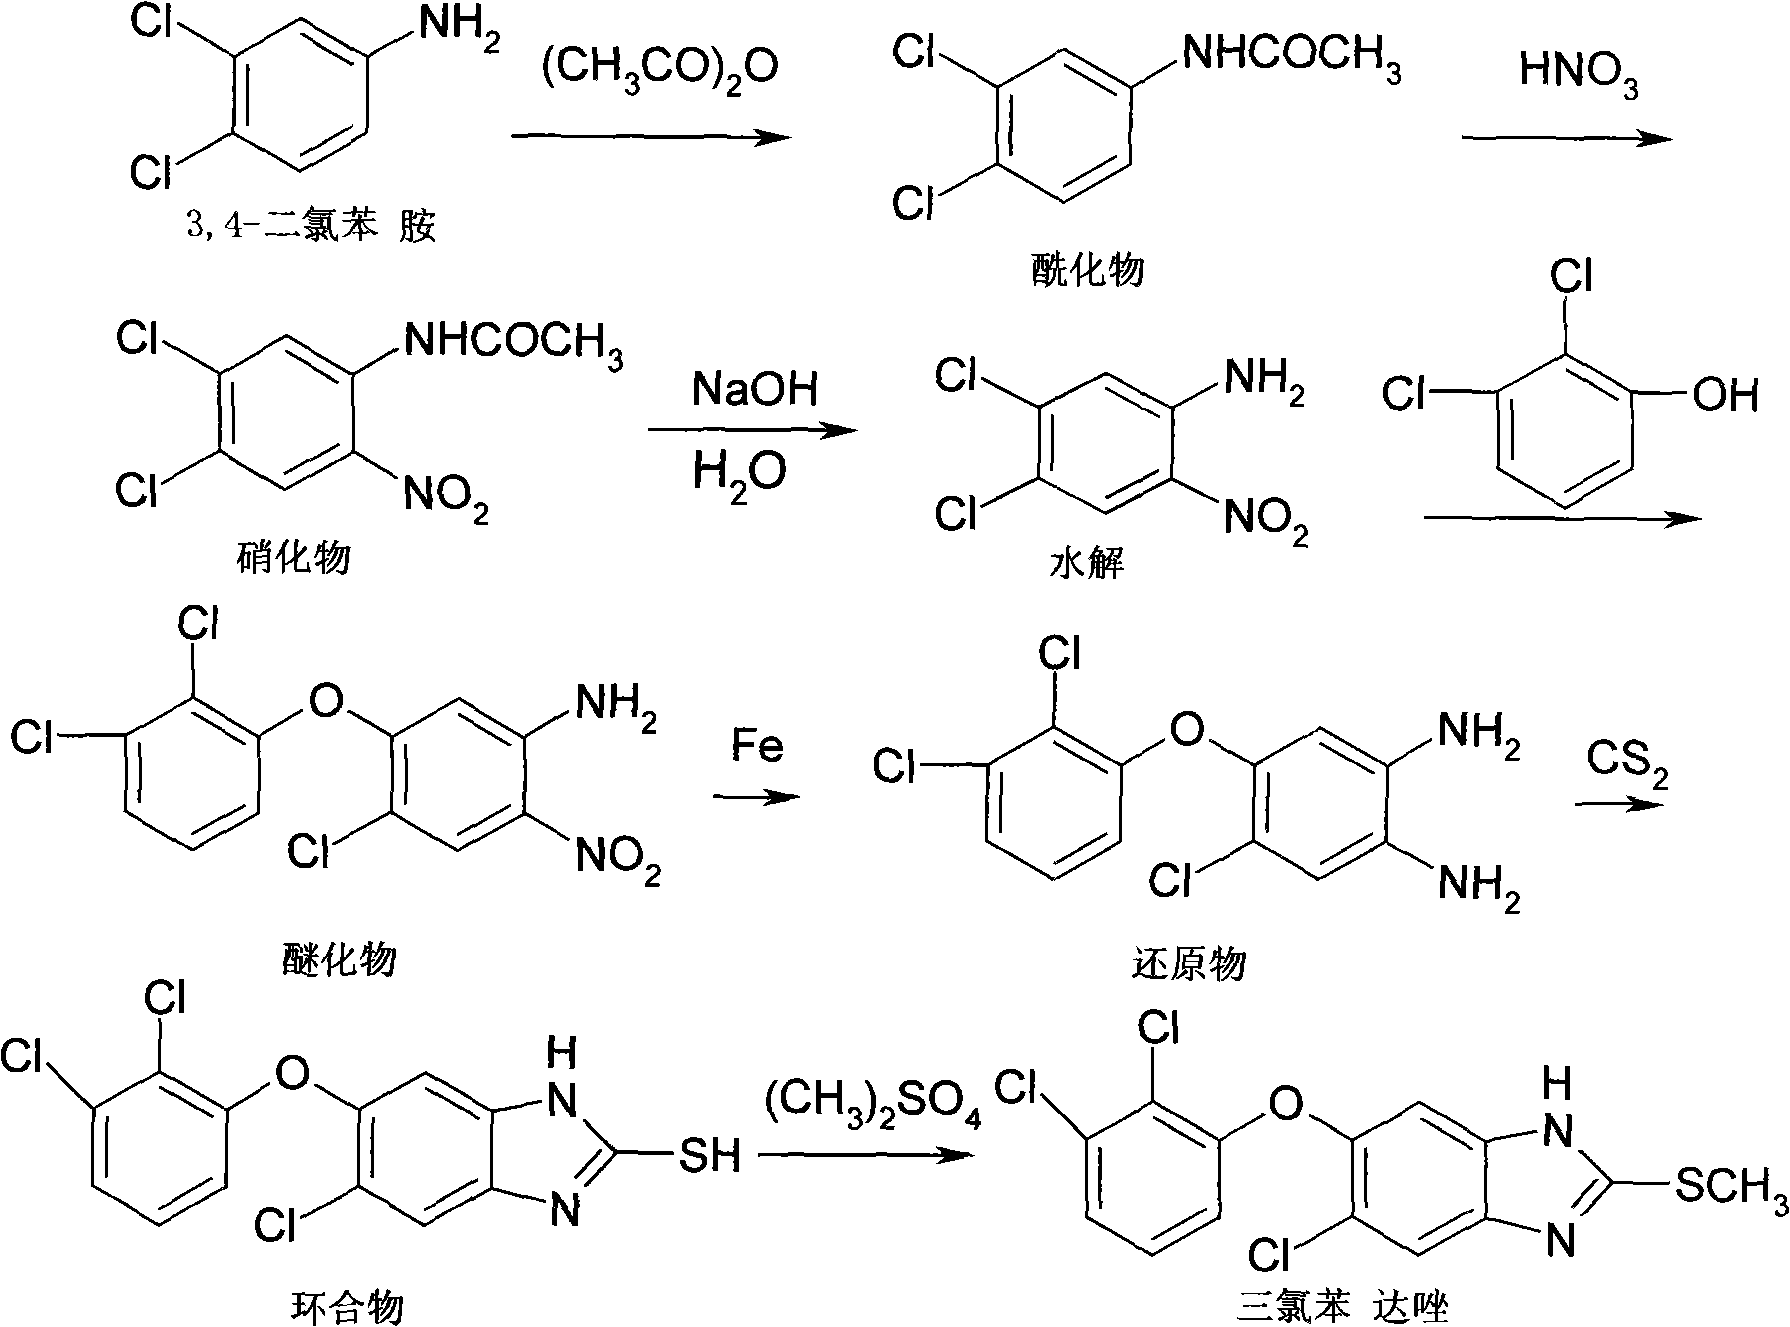 Method for preparing triclabendazole